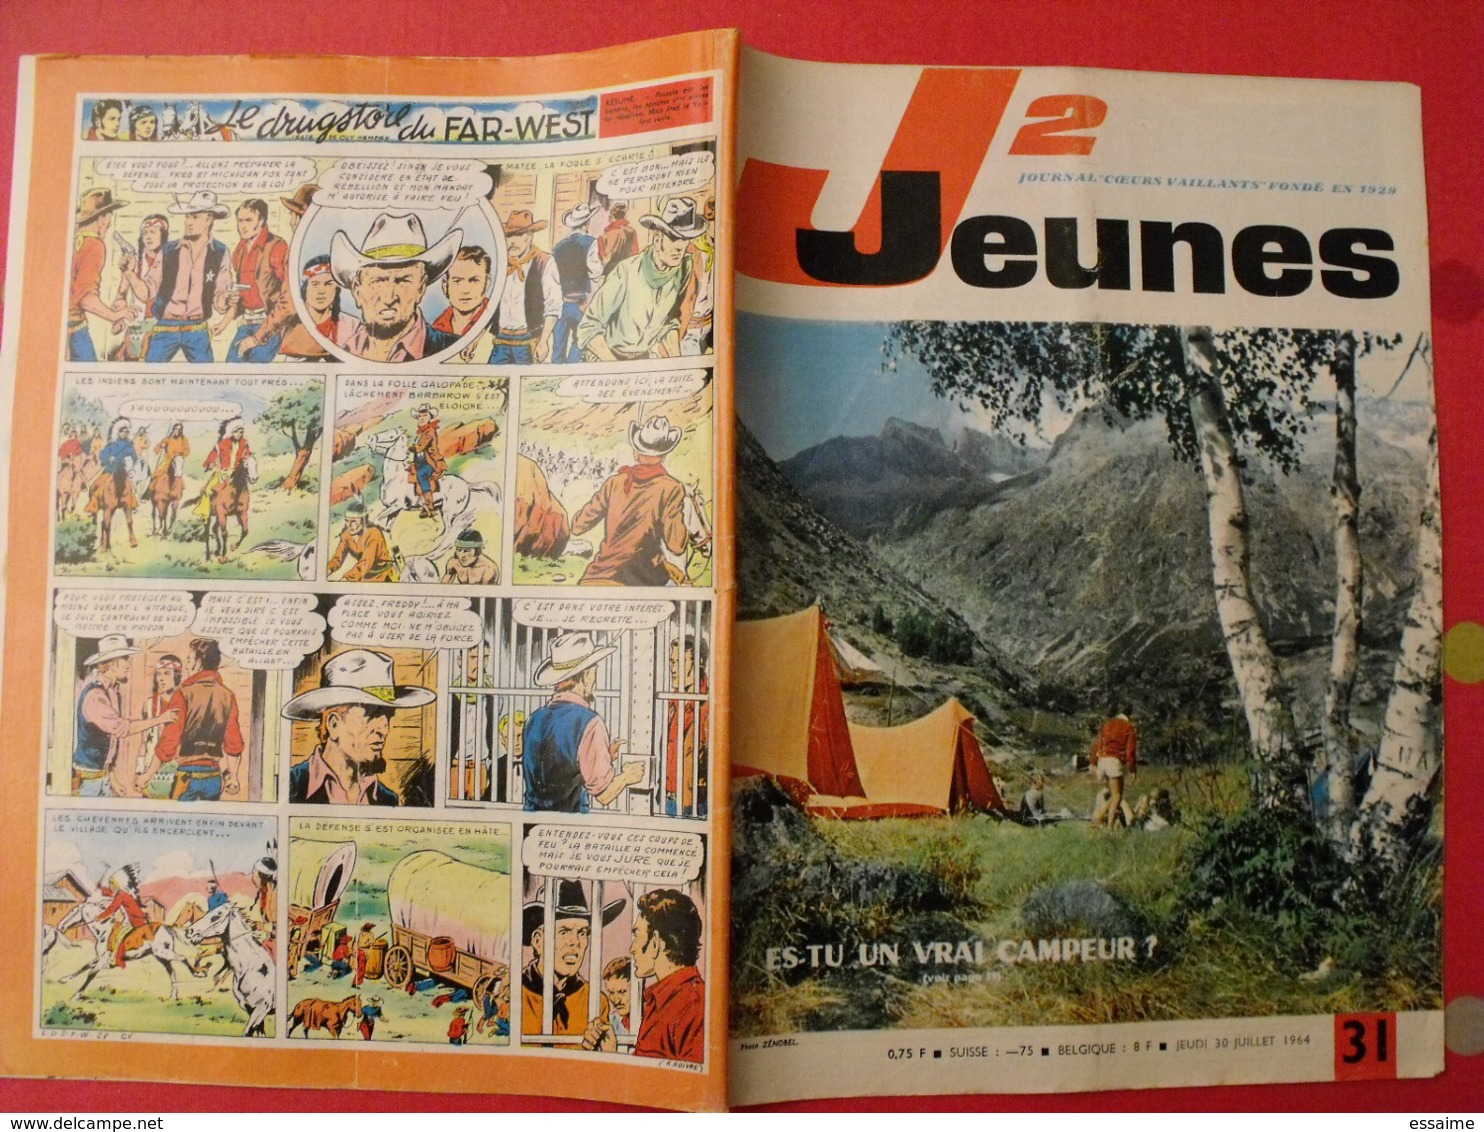 lot de 9 J2 Jeunes de 1964. n° 27 à 35. bays basque mont blanc.  delinx mouminoux brochard gloesner chery rigot.